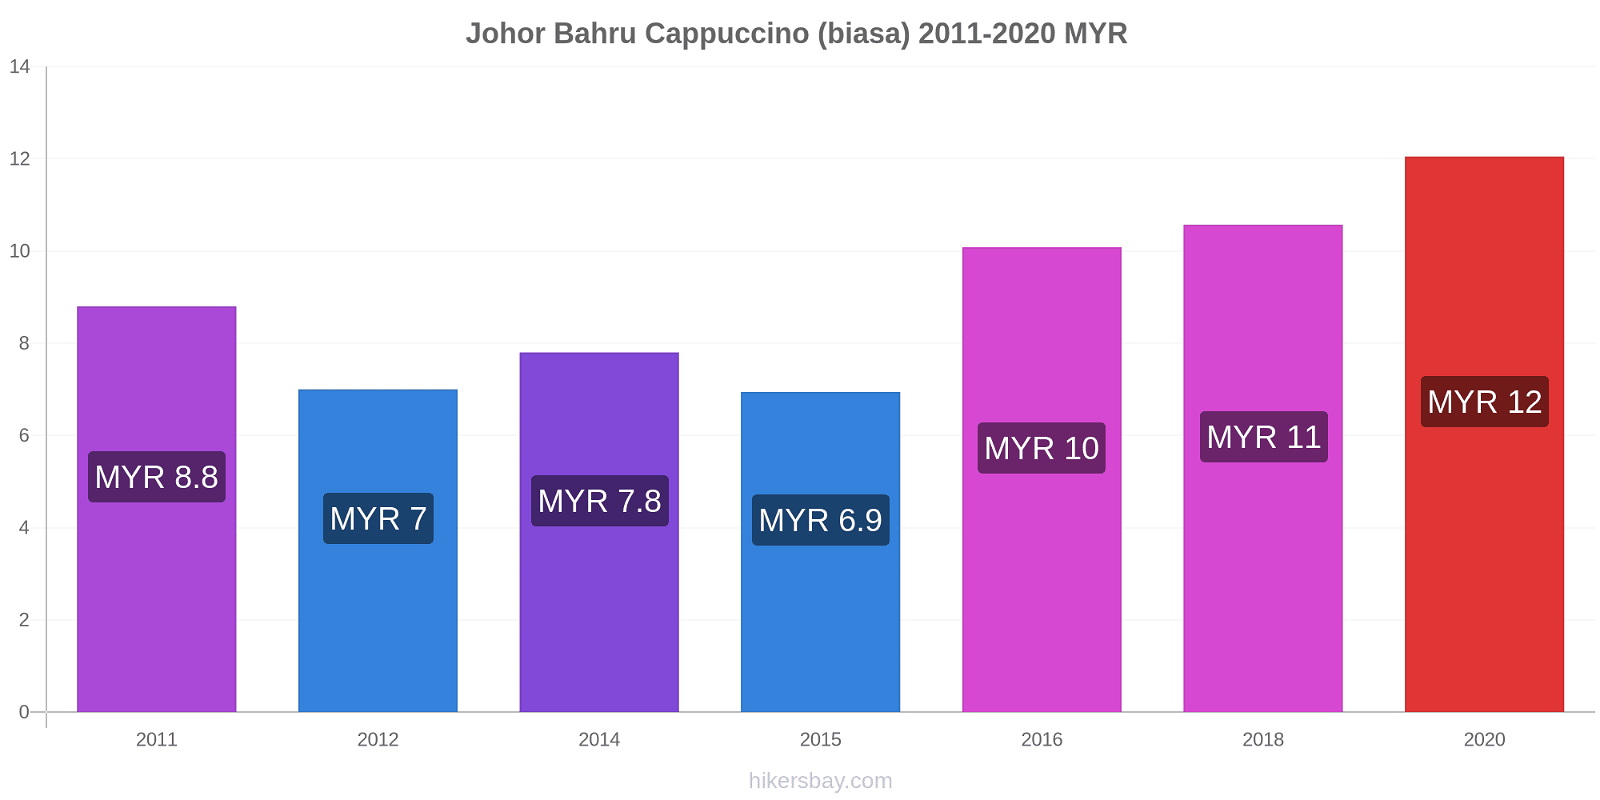 Johor Bahru perubahan harga Cappuccino (biasa) hikersbay.com